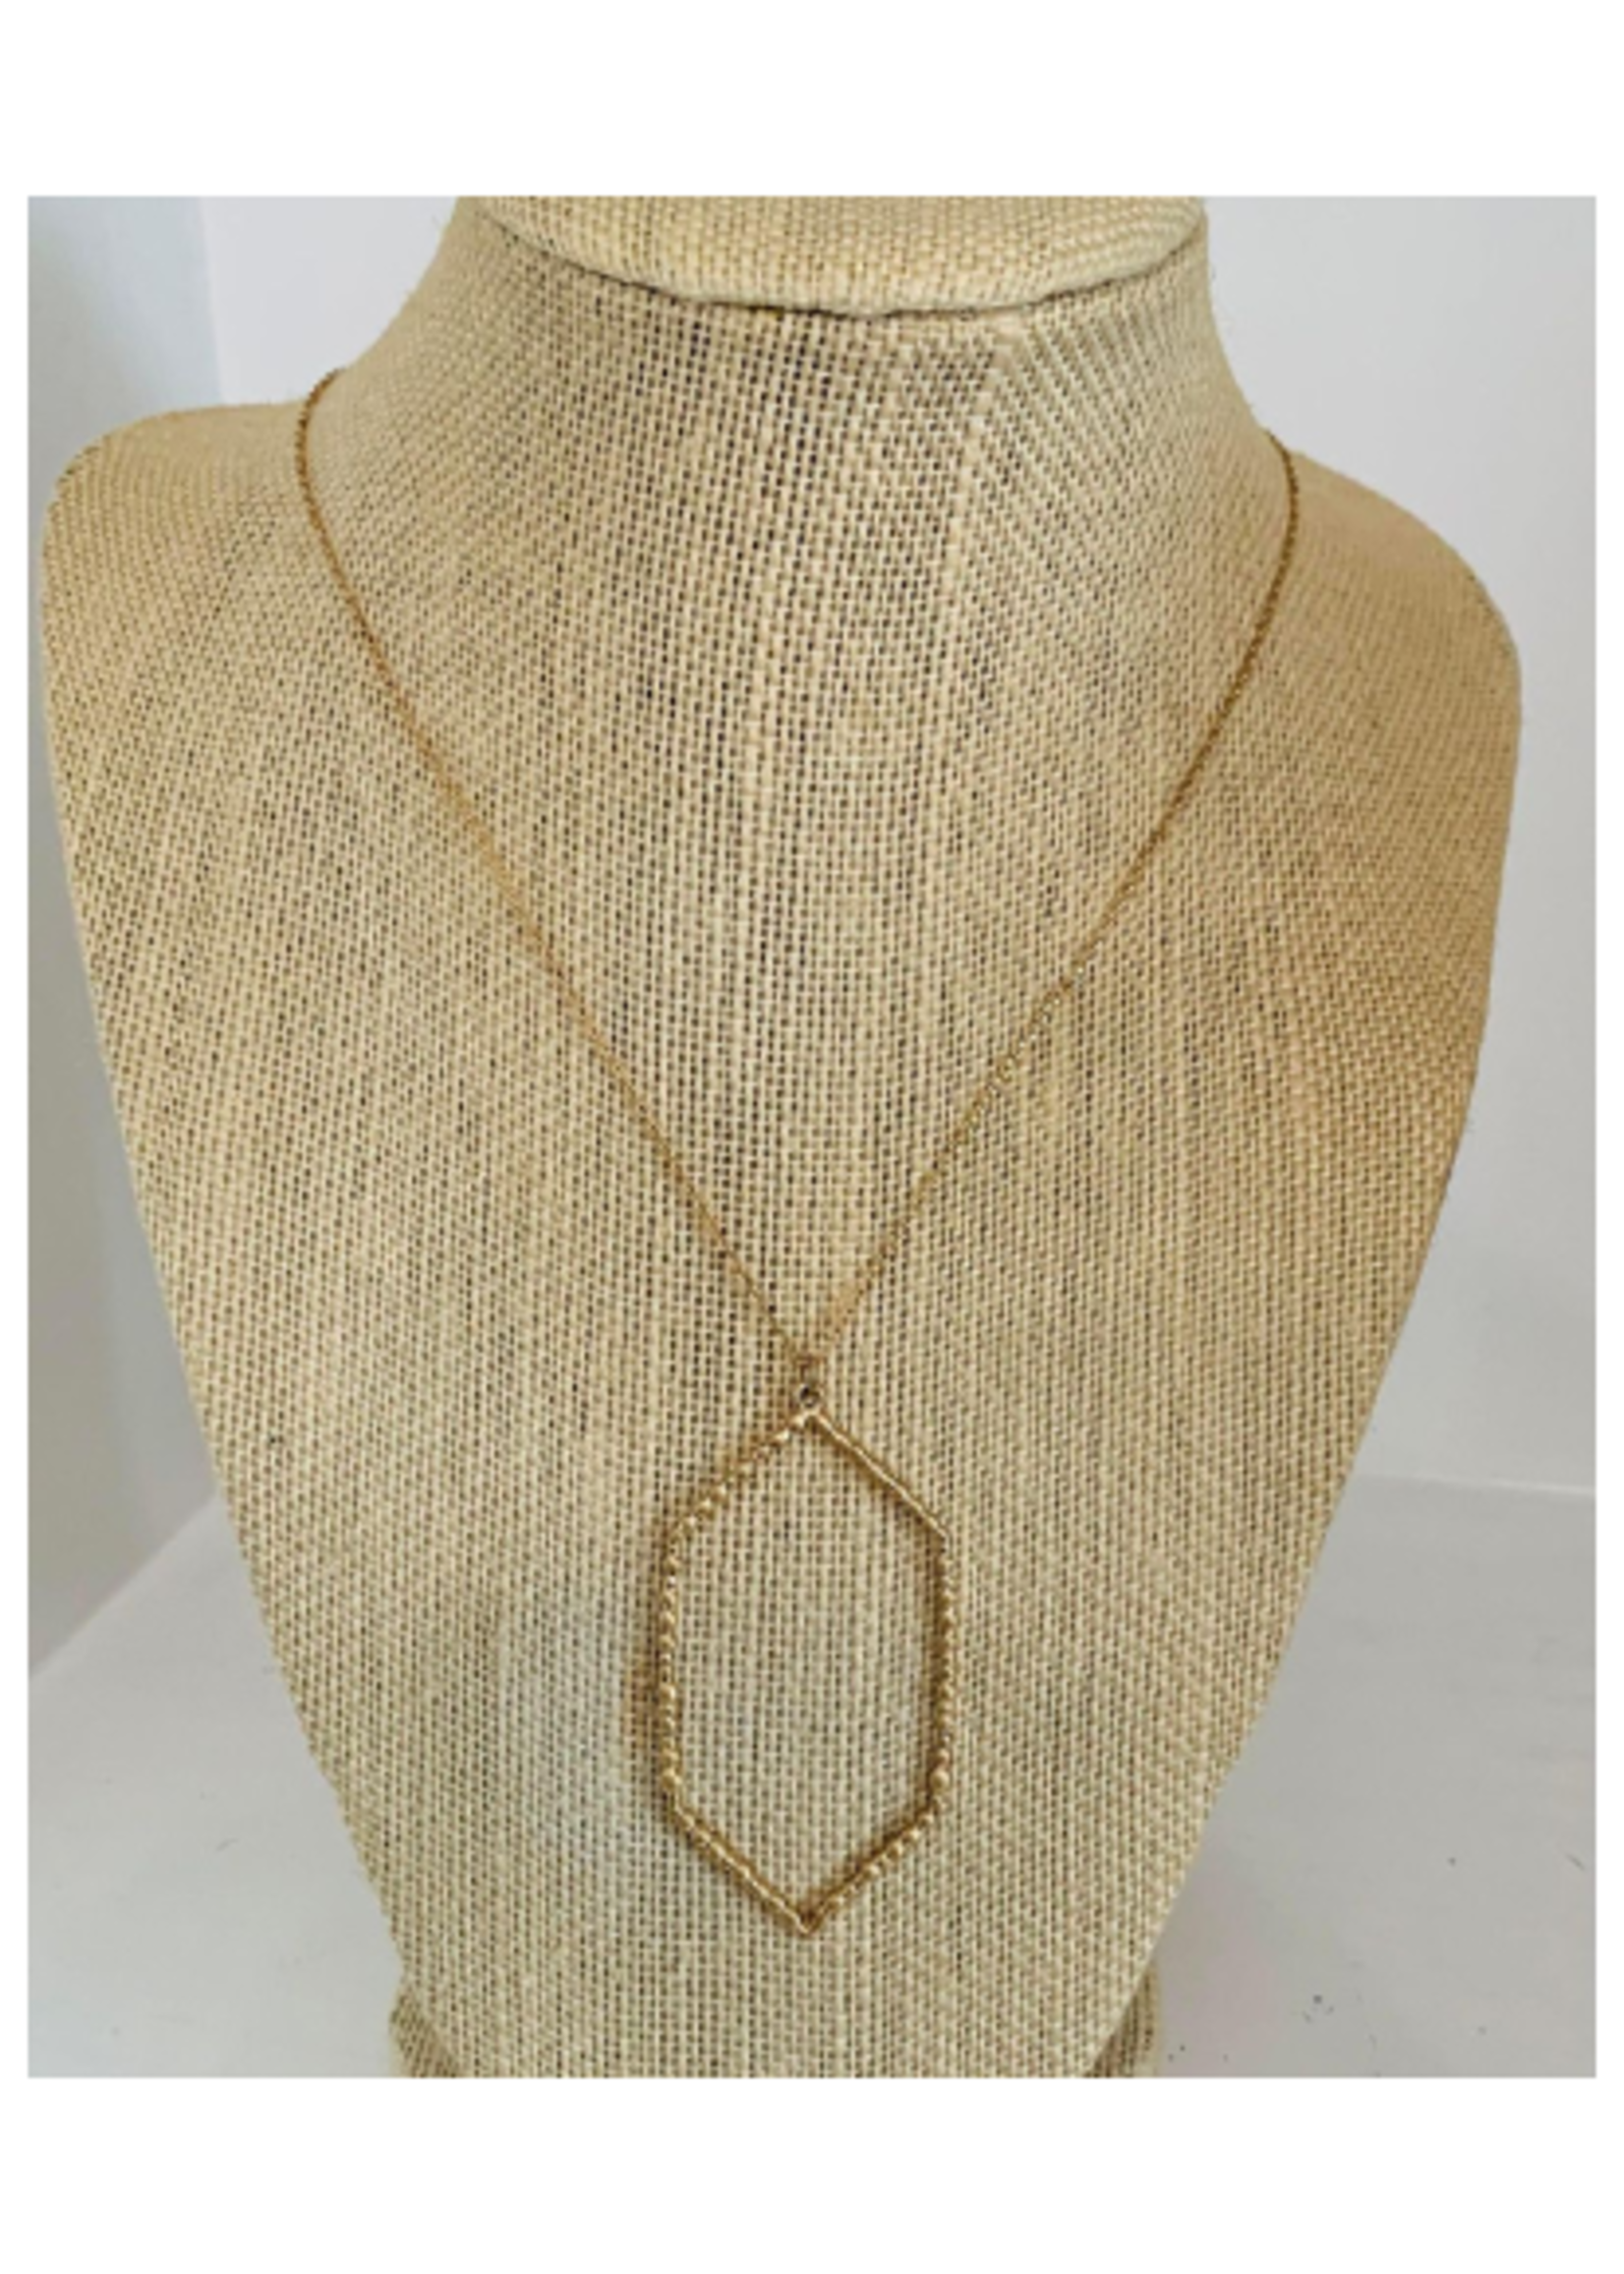 Diamond Pendant Necklace - Gold